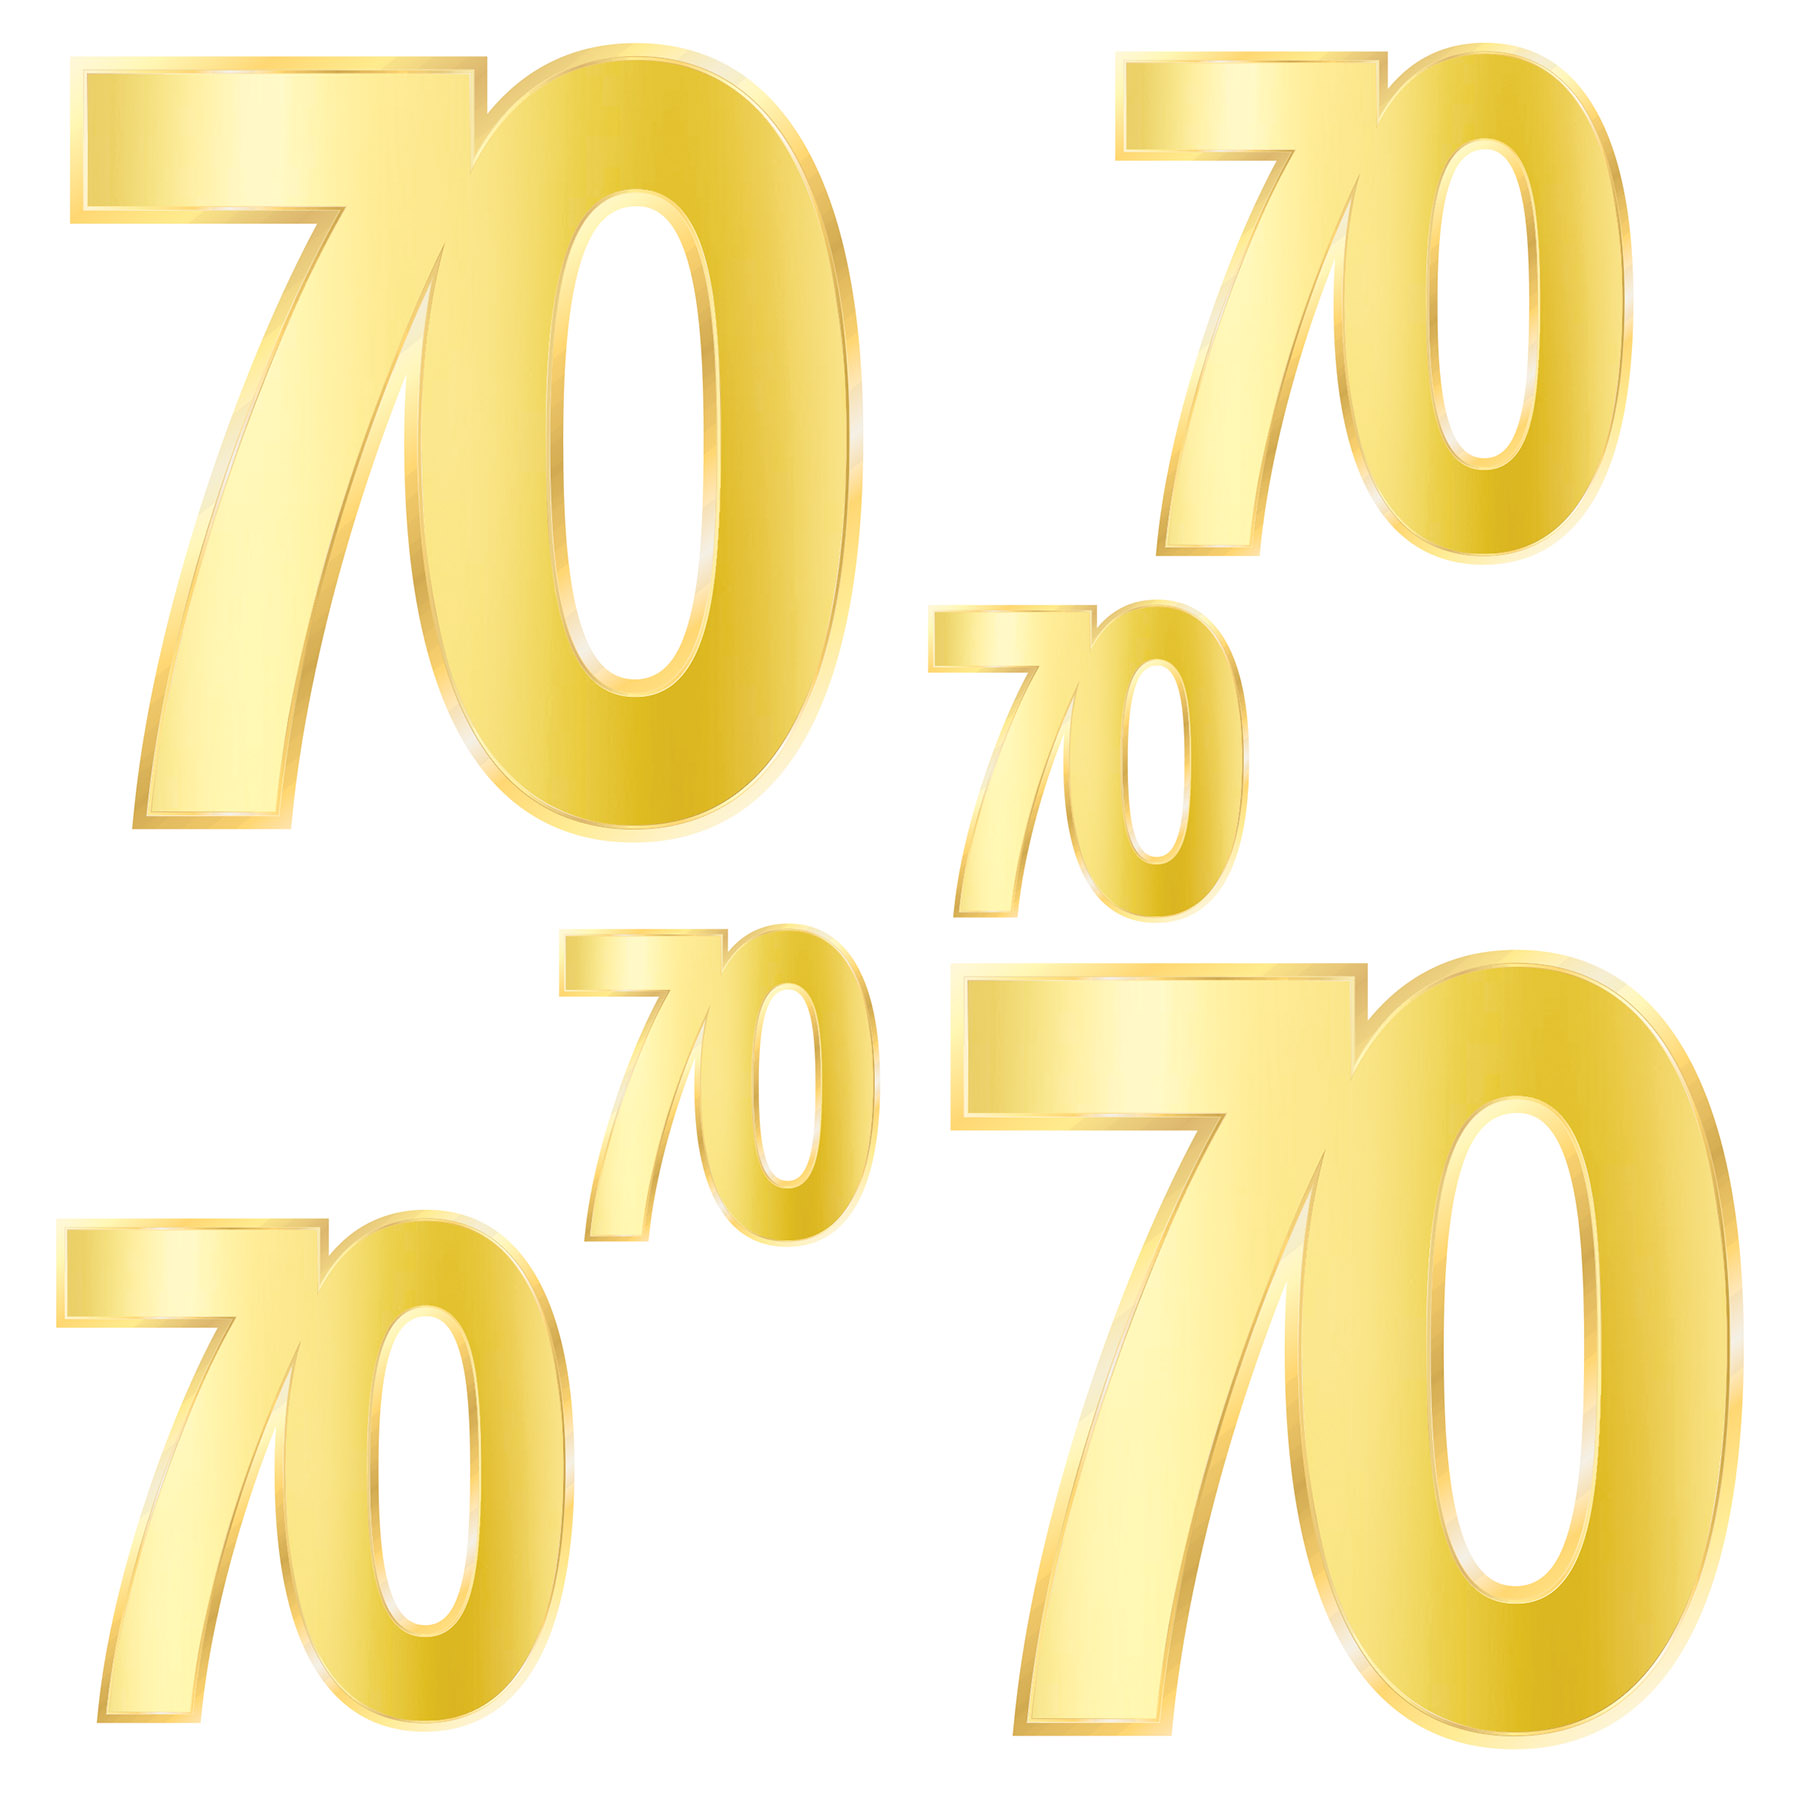 Foil "70" Birthday Cutouts